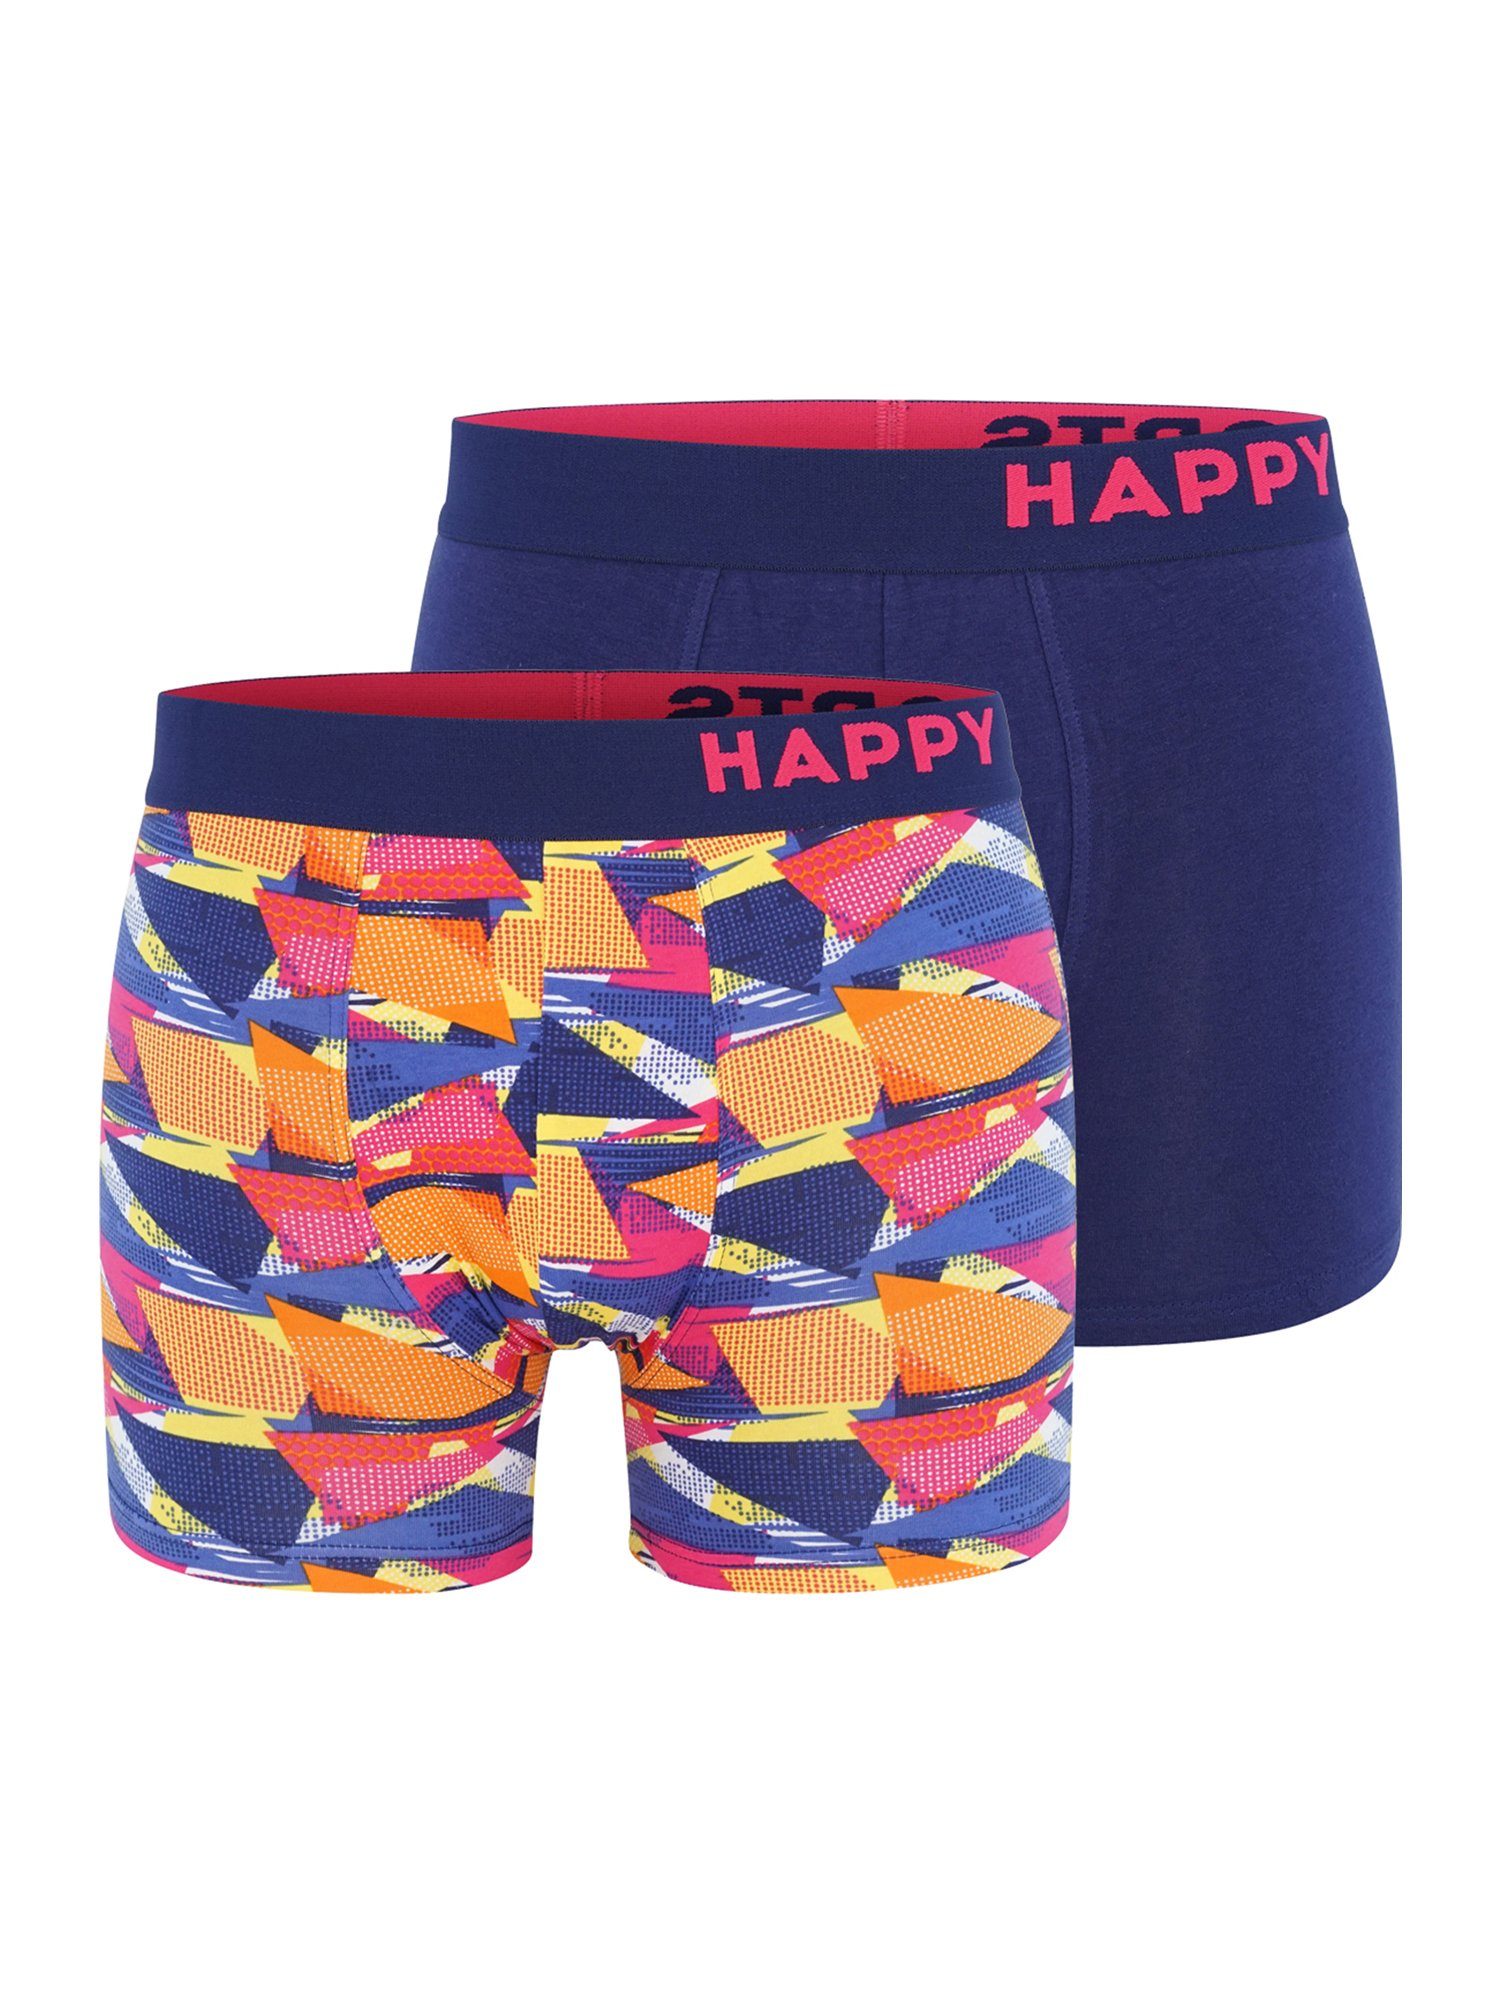 HAPPY SHORTS Retro Pants Motivprint Trunks Neon